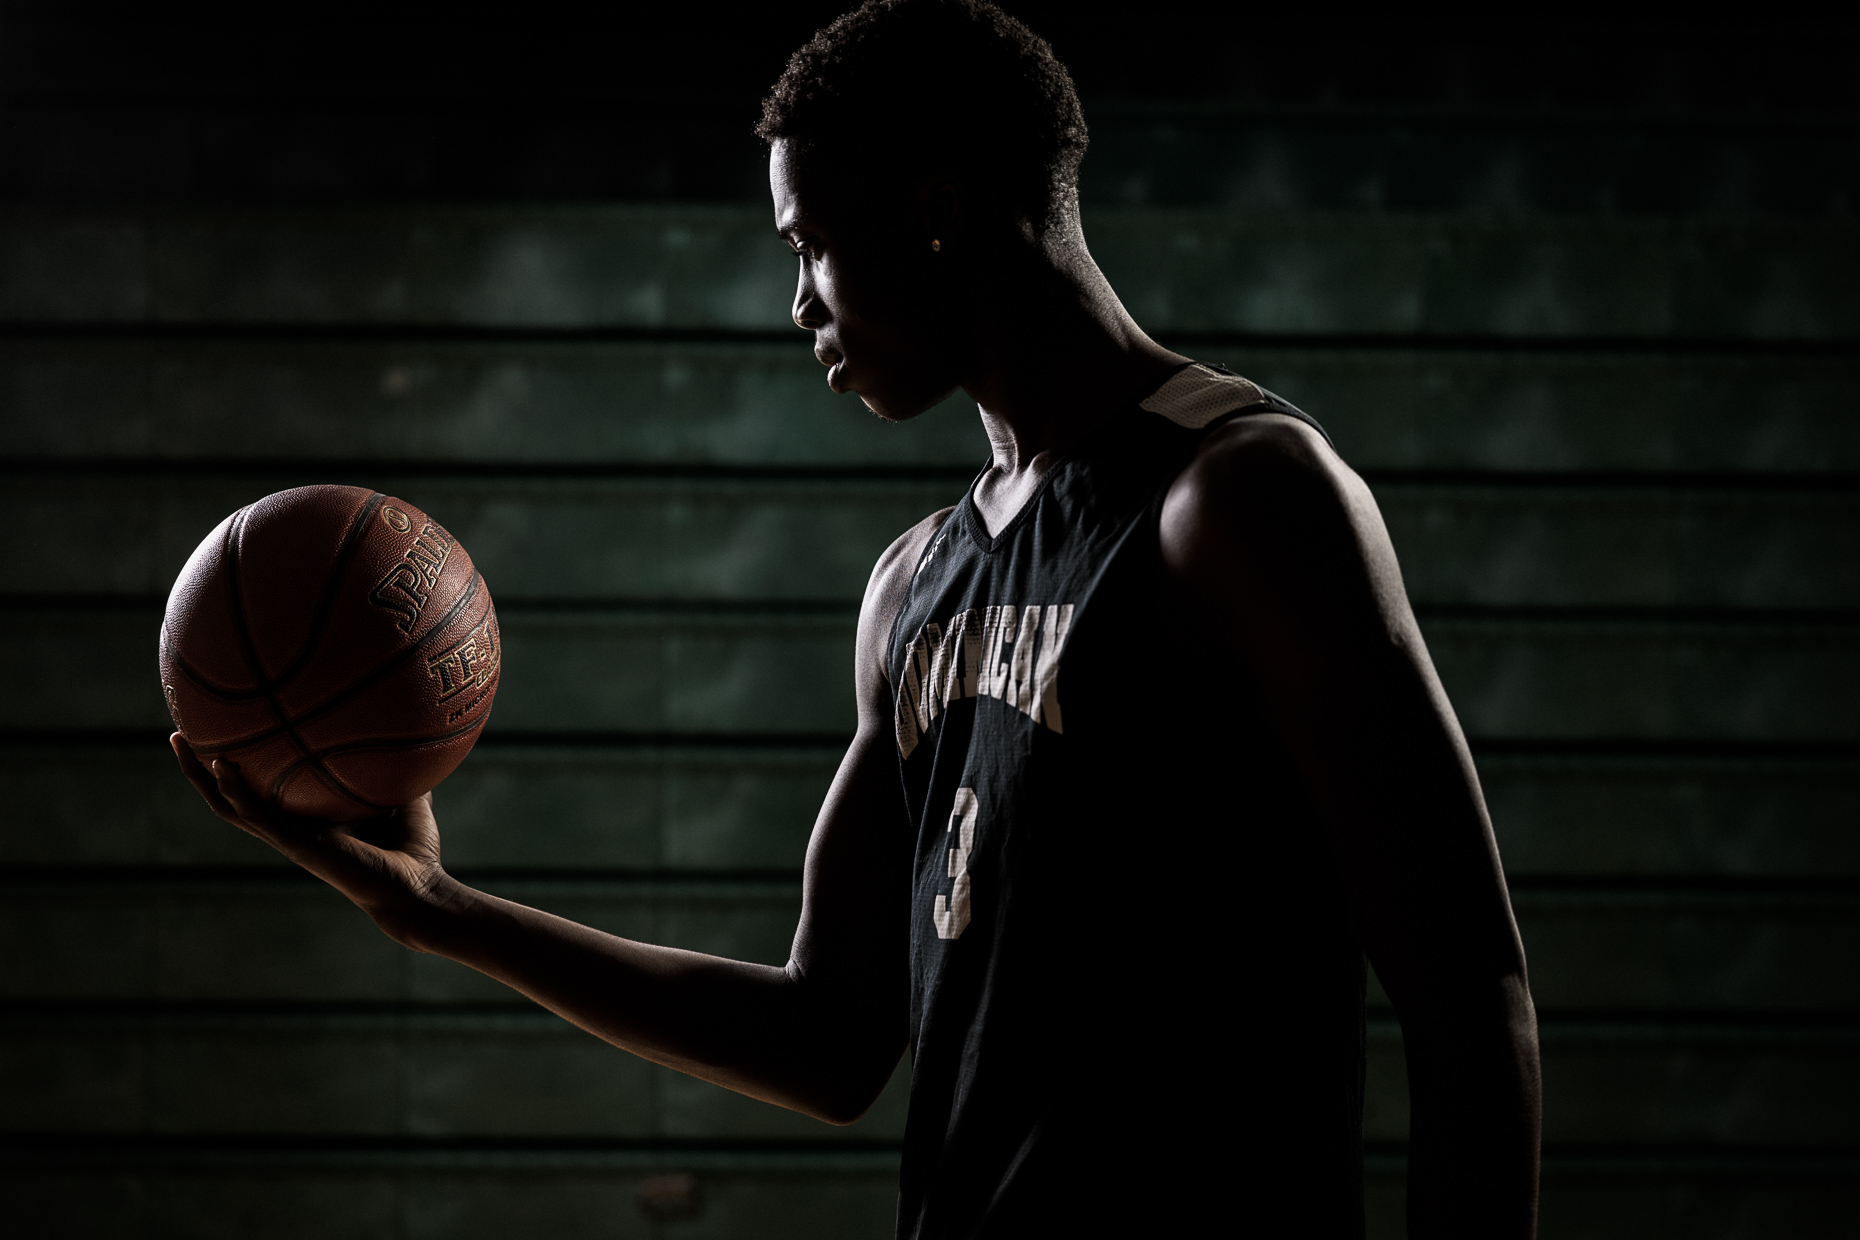 editorial sports photographer - Alex Antetokounmpo holding a basketball at his high school gym